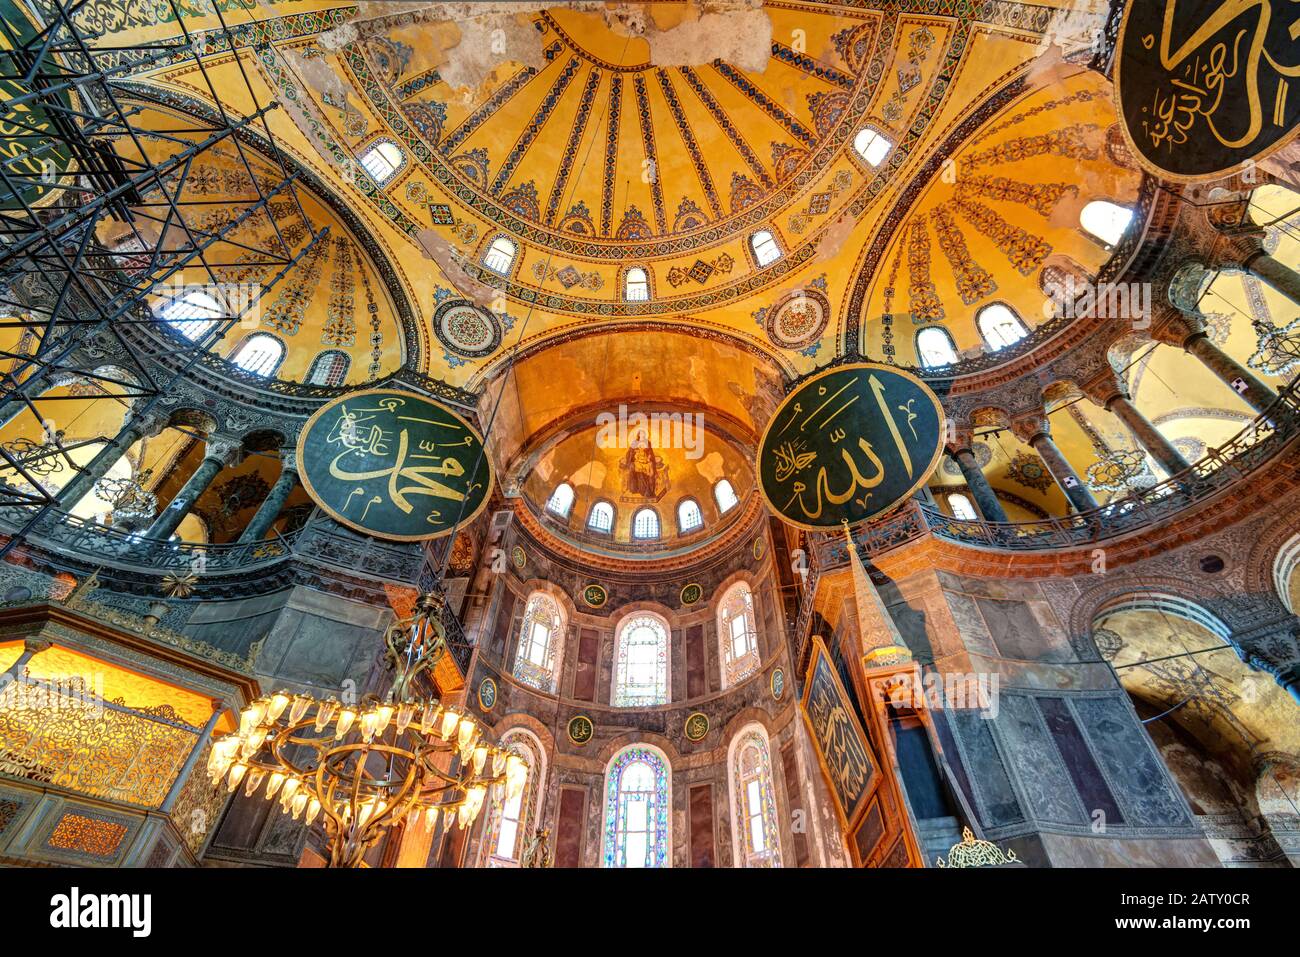 Inside the Hagia Sophia in Istanbul, Turkey. Hagia Sophia is the greatest monument of Byzantine Culture. Stock Photo